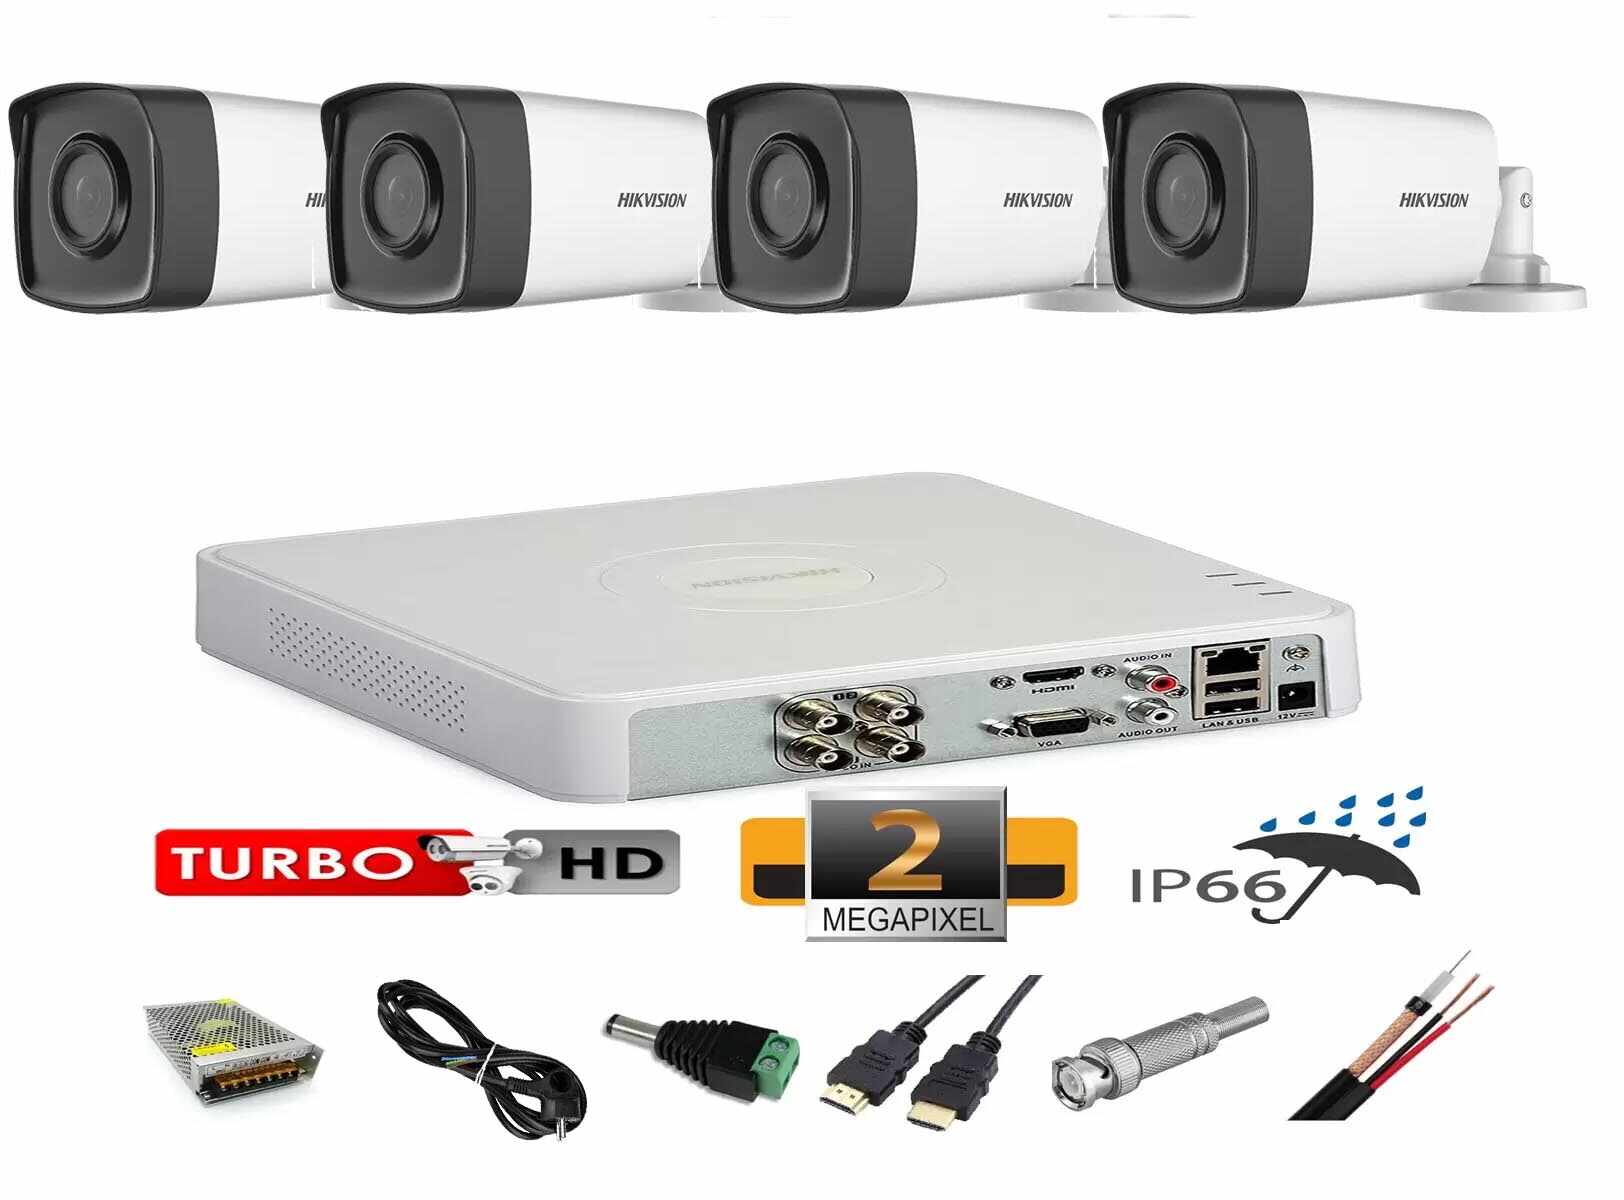 Sistem supraveghere video profesional exterior 4 camere 2MP Hikvision Turbo HD 40m IR full accesorii accesorii, internet